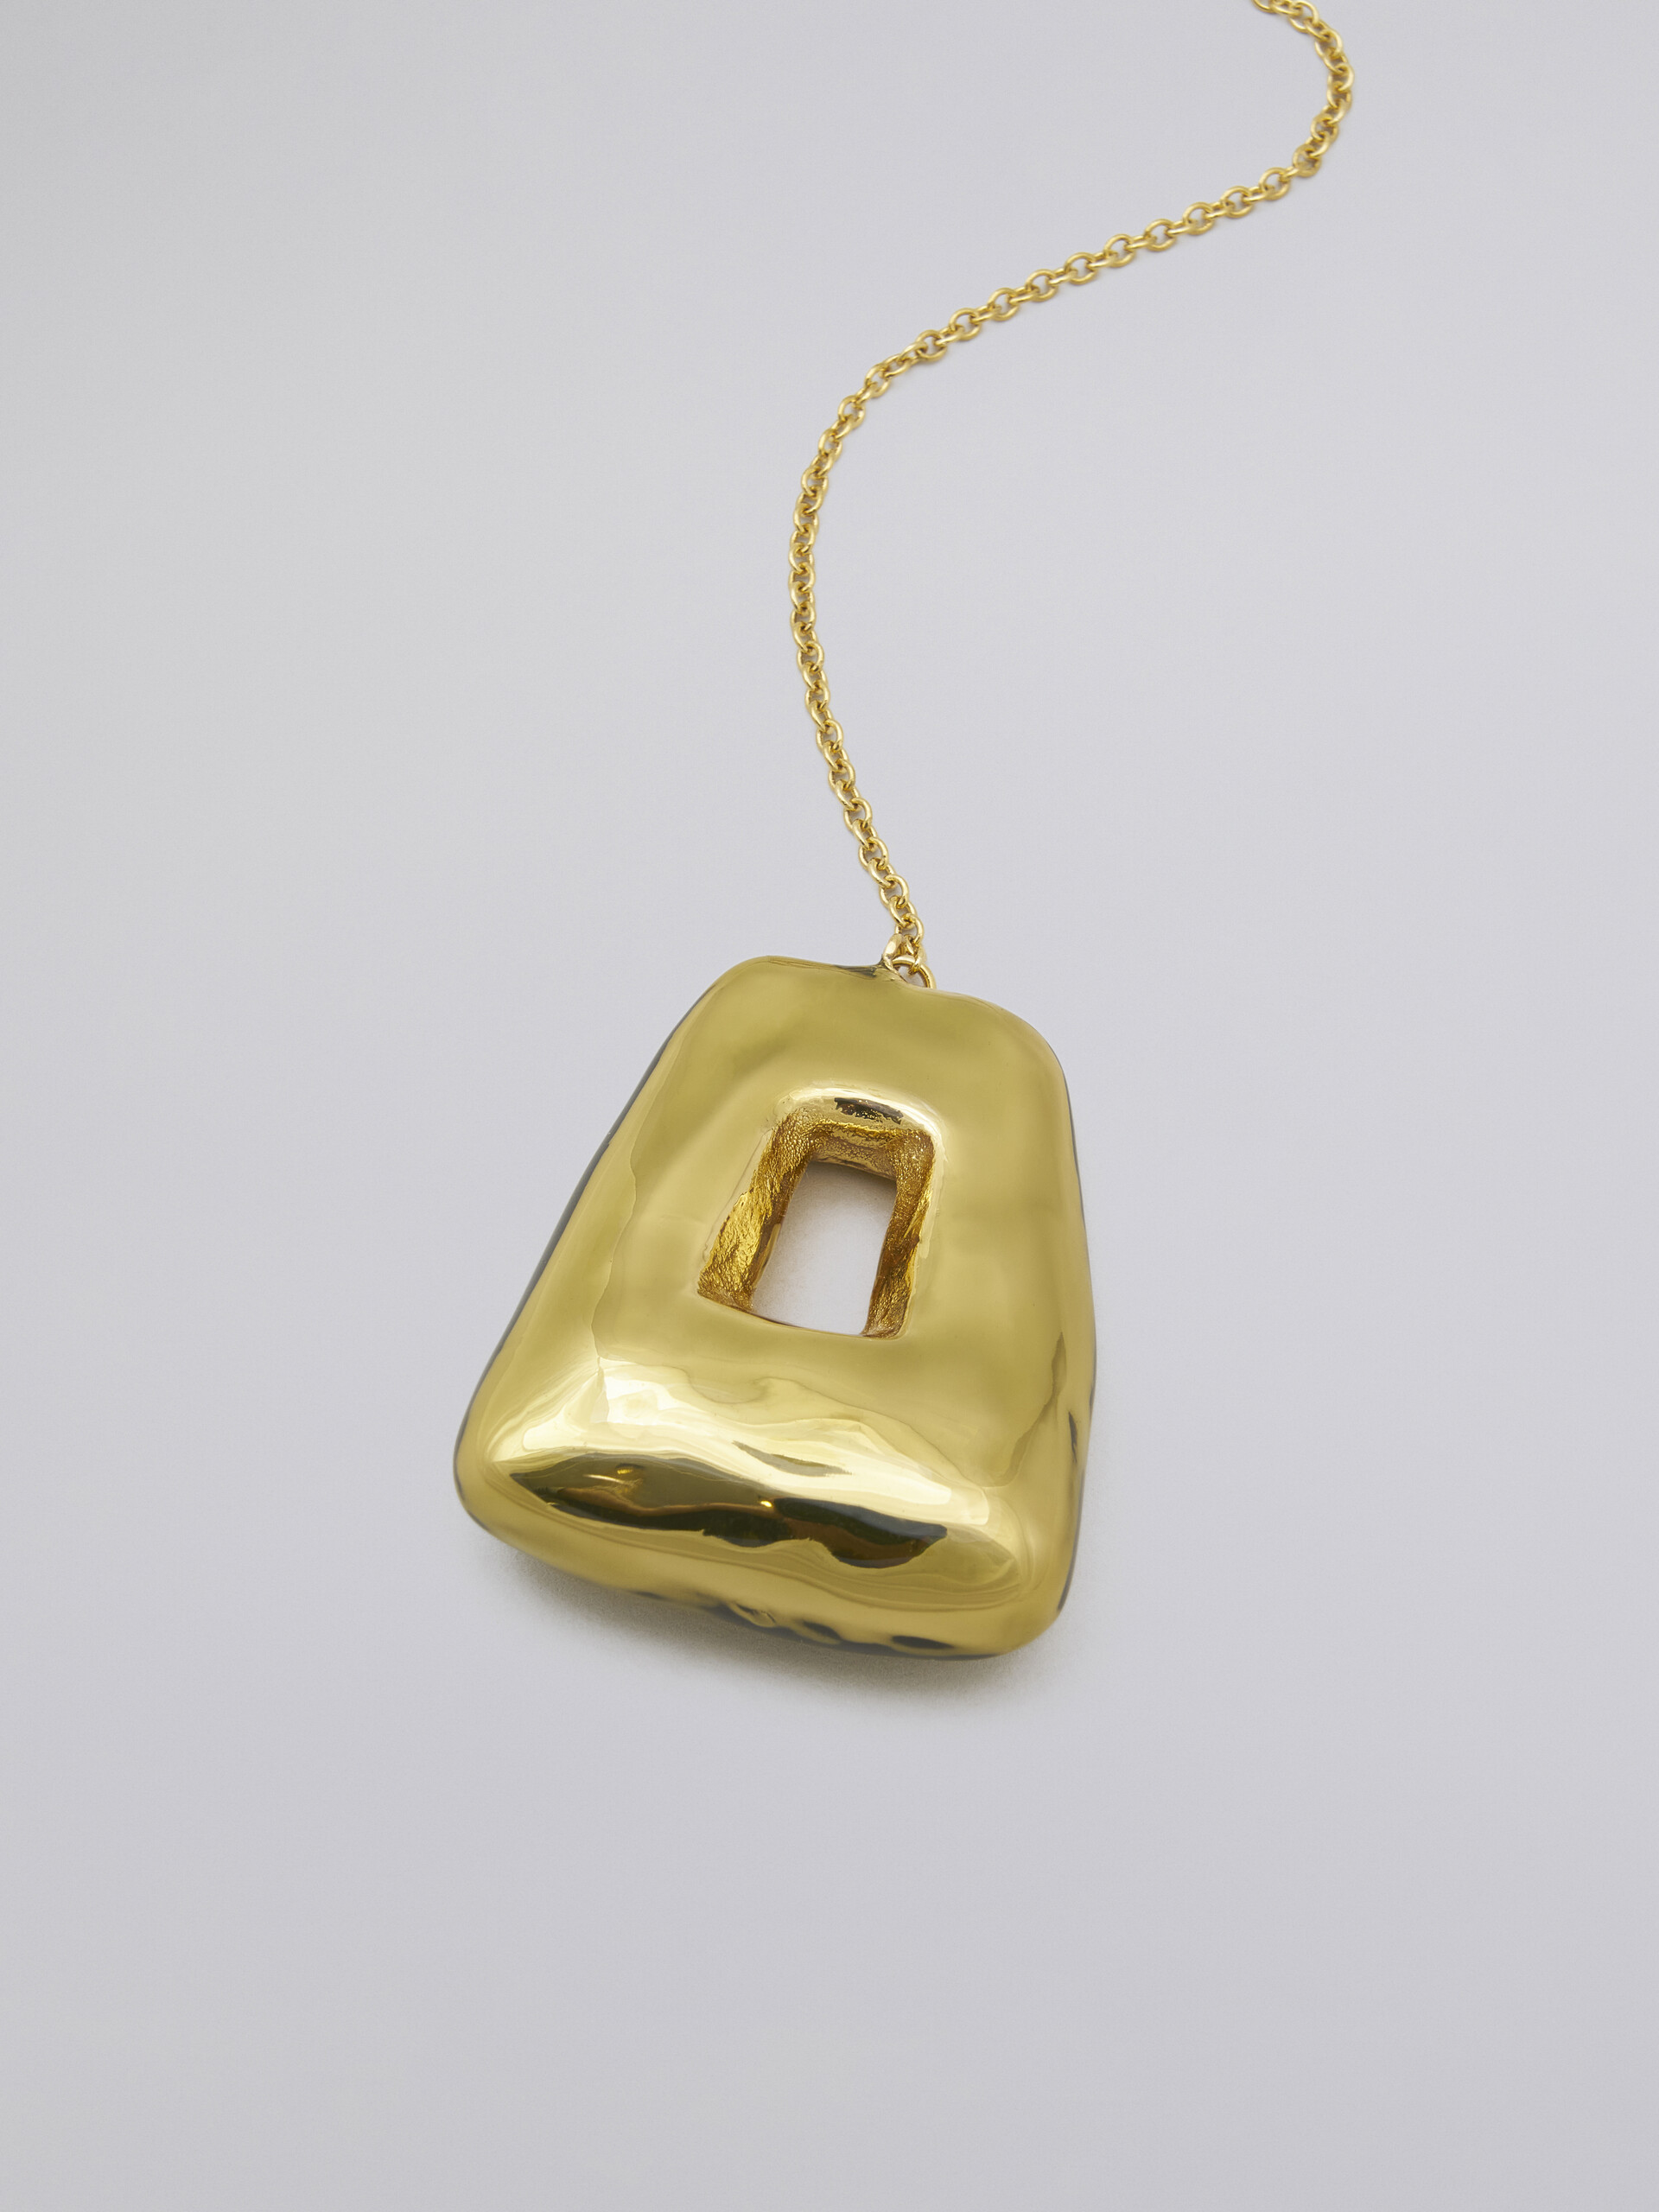 Goldfarbene TRAPEZE Metall-Halskette mit transparentem, emailliertem Anhänger - Halsketten - Image 2